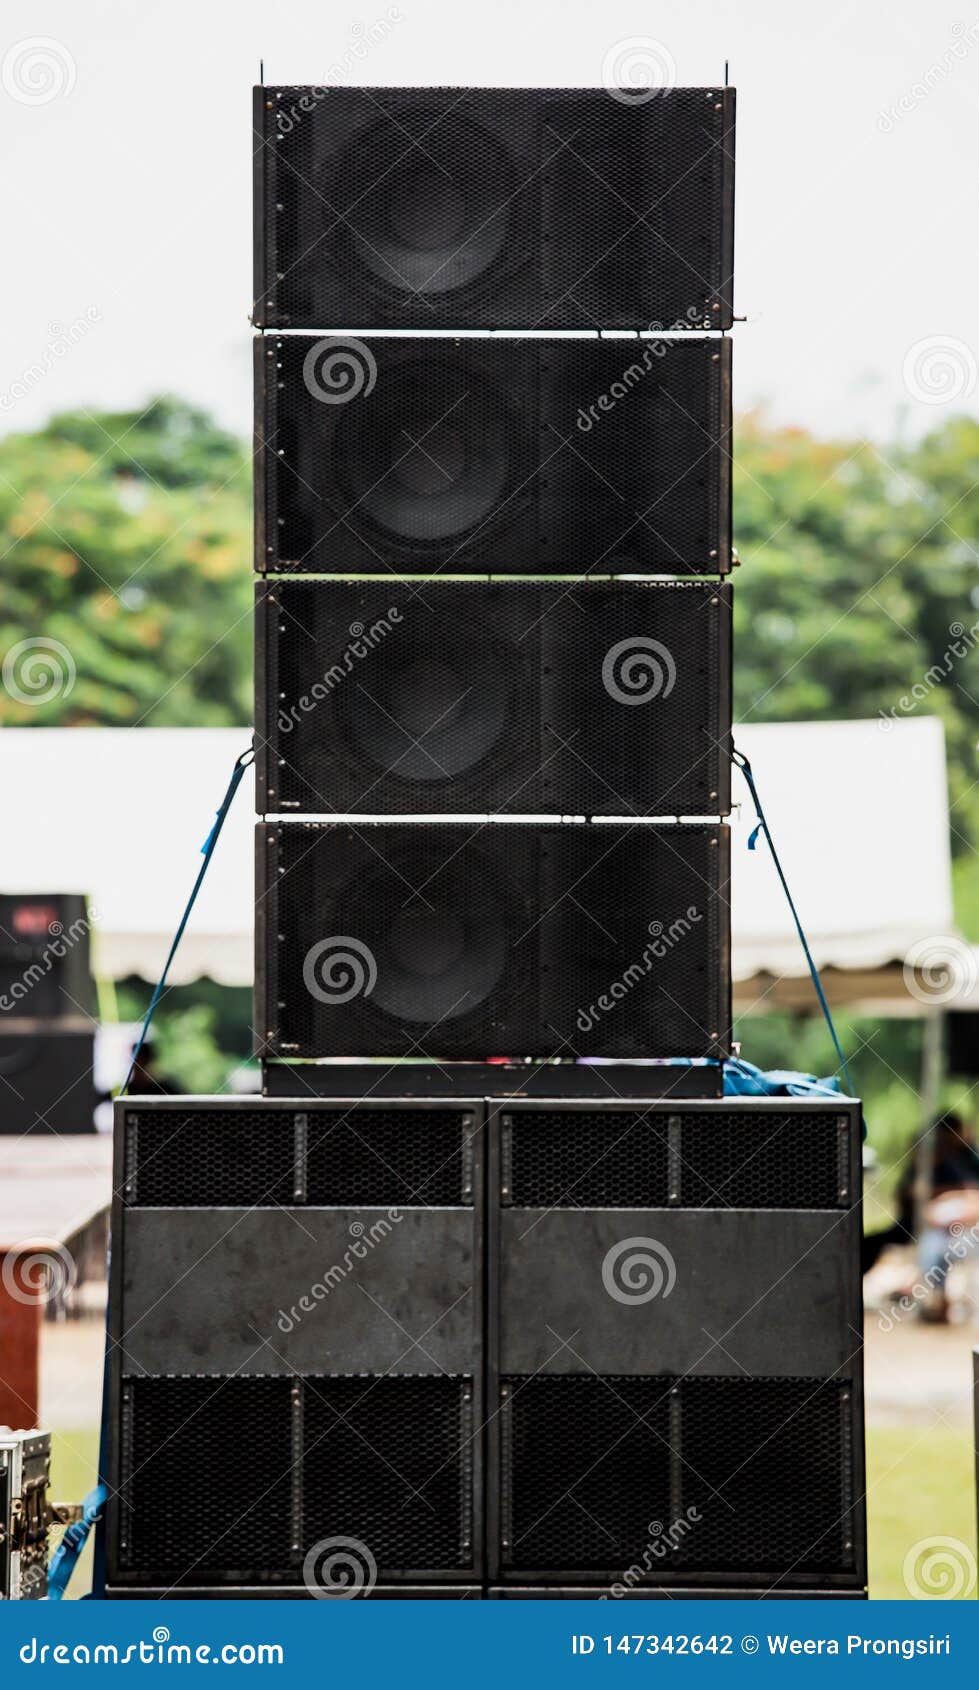 https://thumbs.dreamstime.com/z/speakers-outdoor-tha-black-speakers-hang-steel-concert-sound-system-speaker-noise-outdoors-tower-stage-performance-space-147342642.jpg